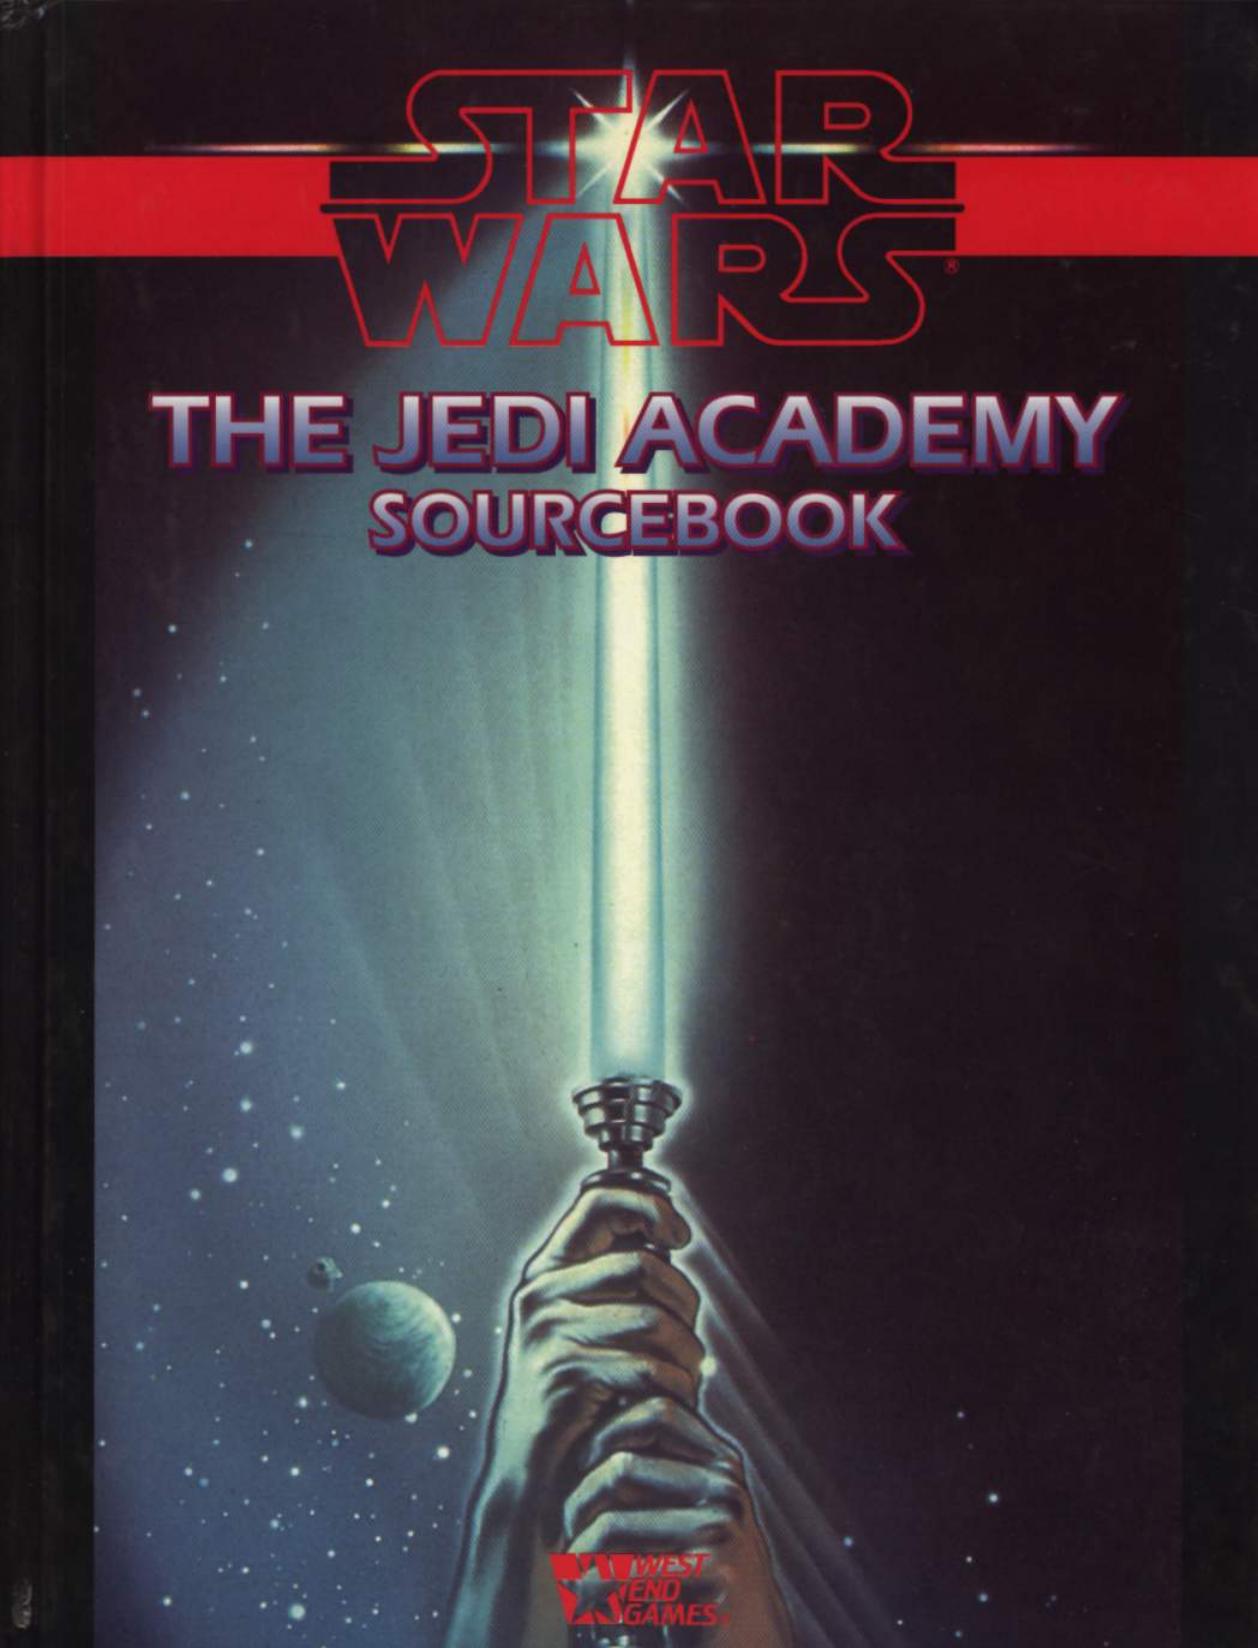 The Jedi Academy Sourcebook